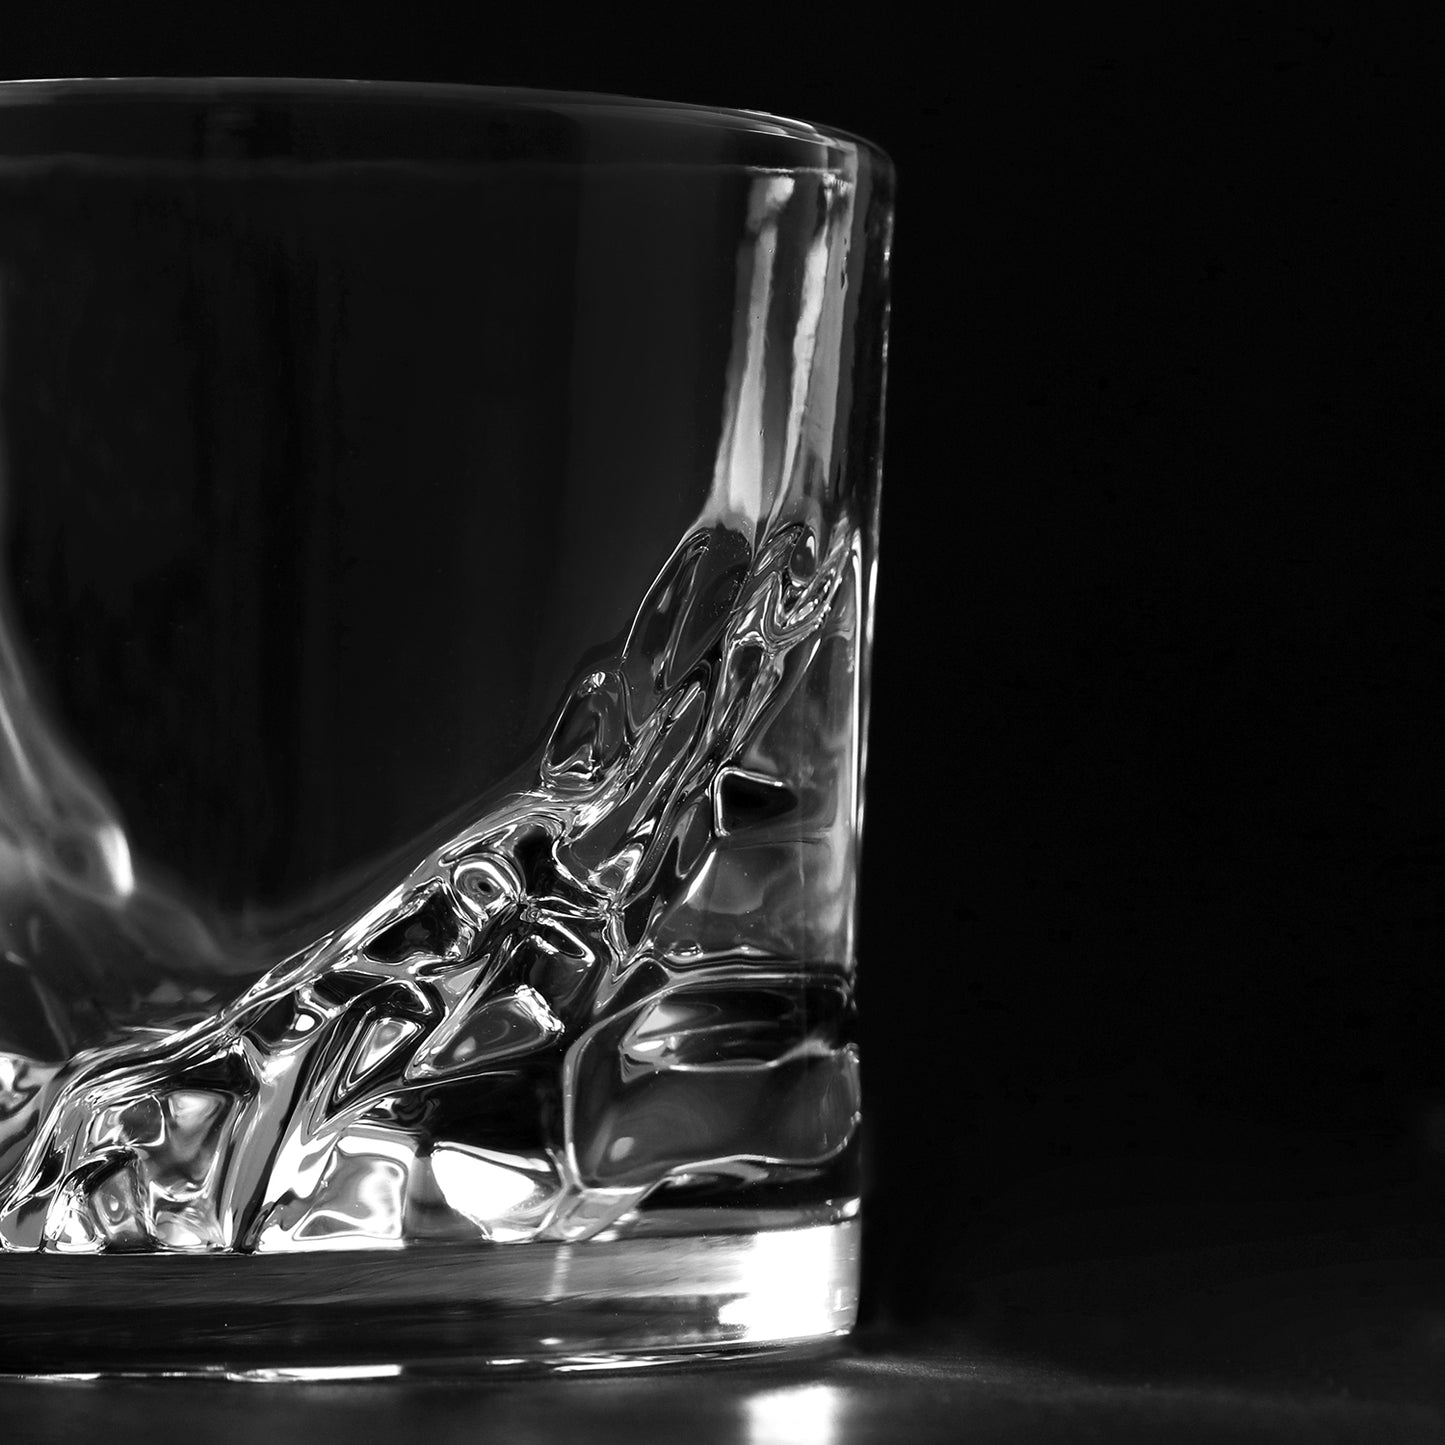 Grand Canyon Crystal Whiskey Glasses Set of 4 - Liiton –